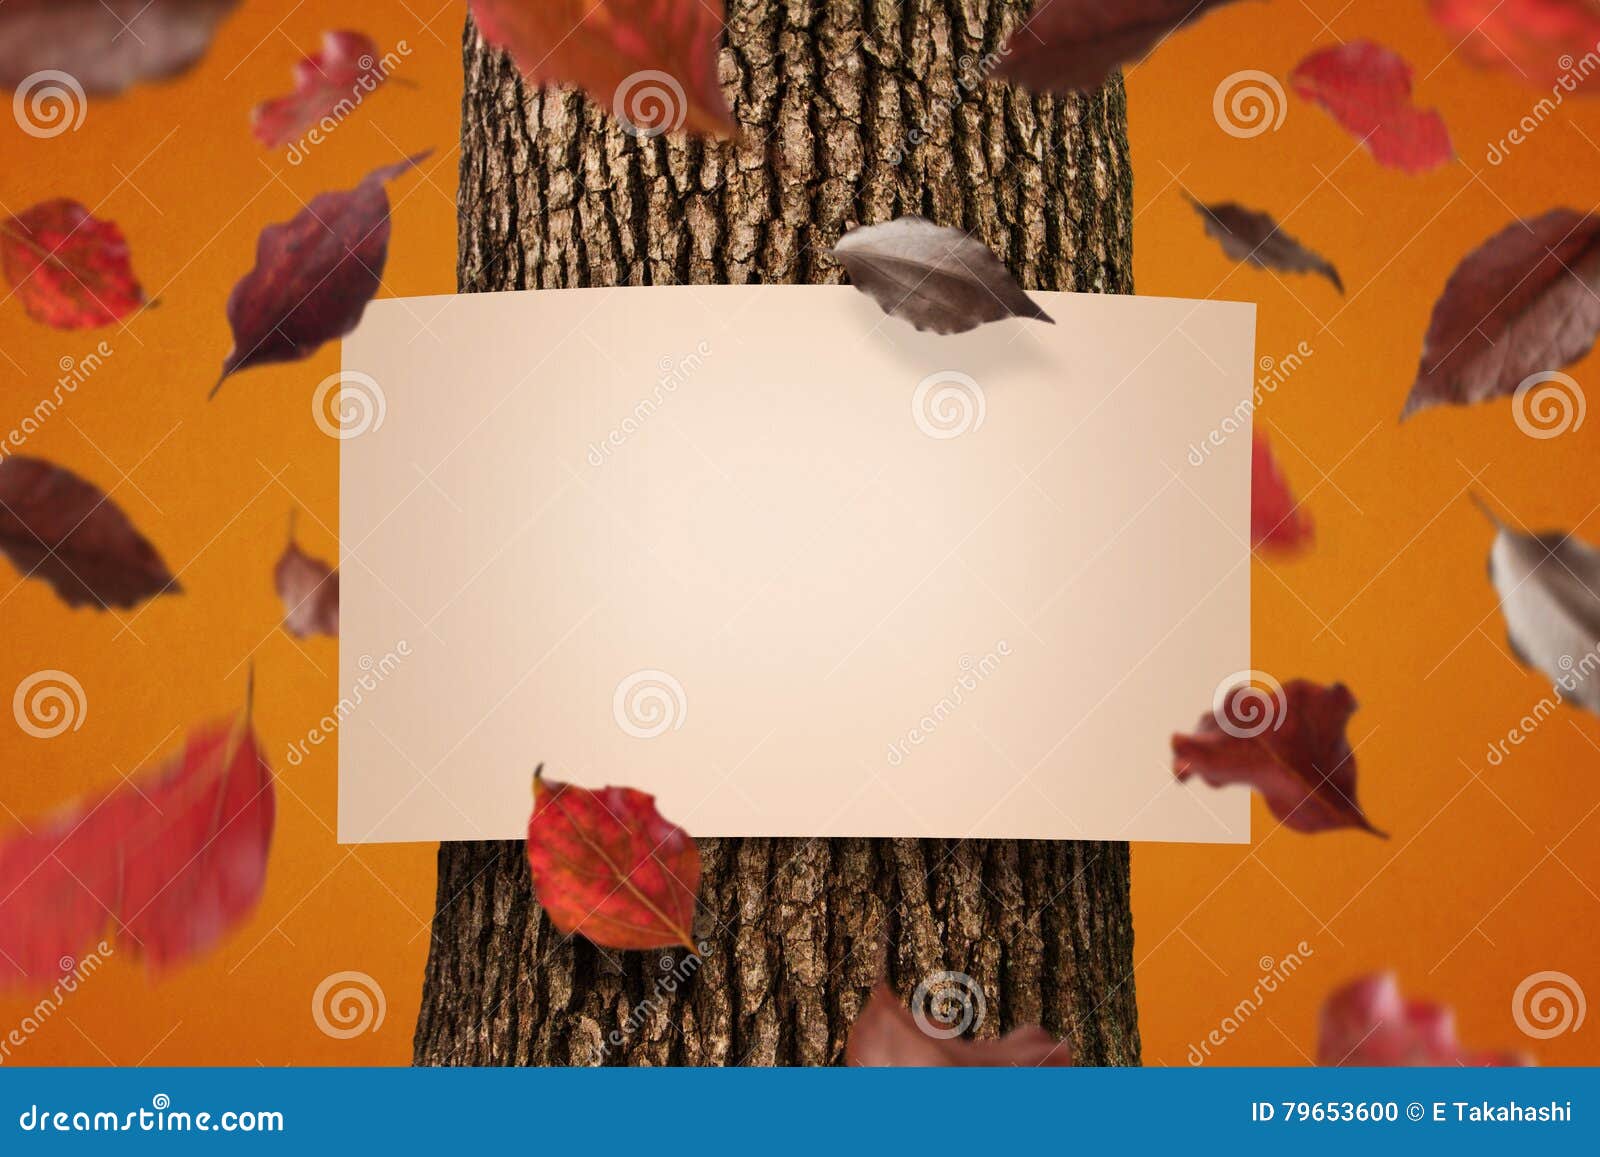 autumn poster